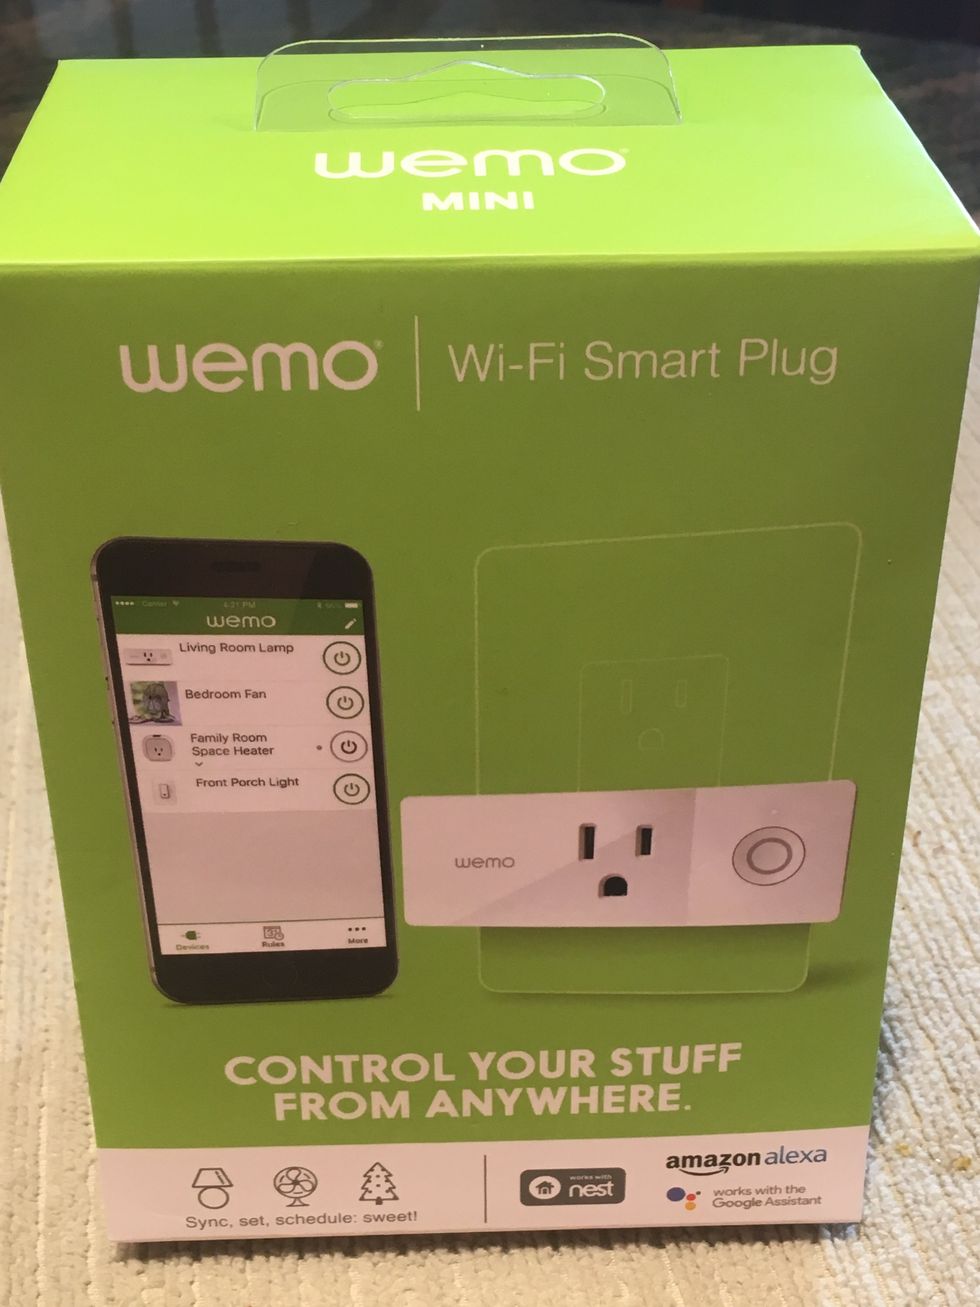 wemo-mini-wi-fi-smart-plug-review-a-good-smart-device-gearbrain